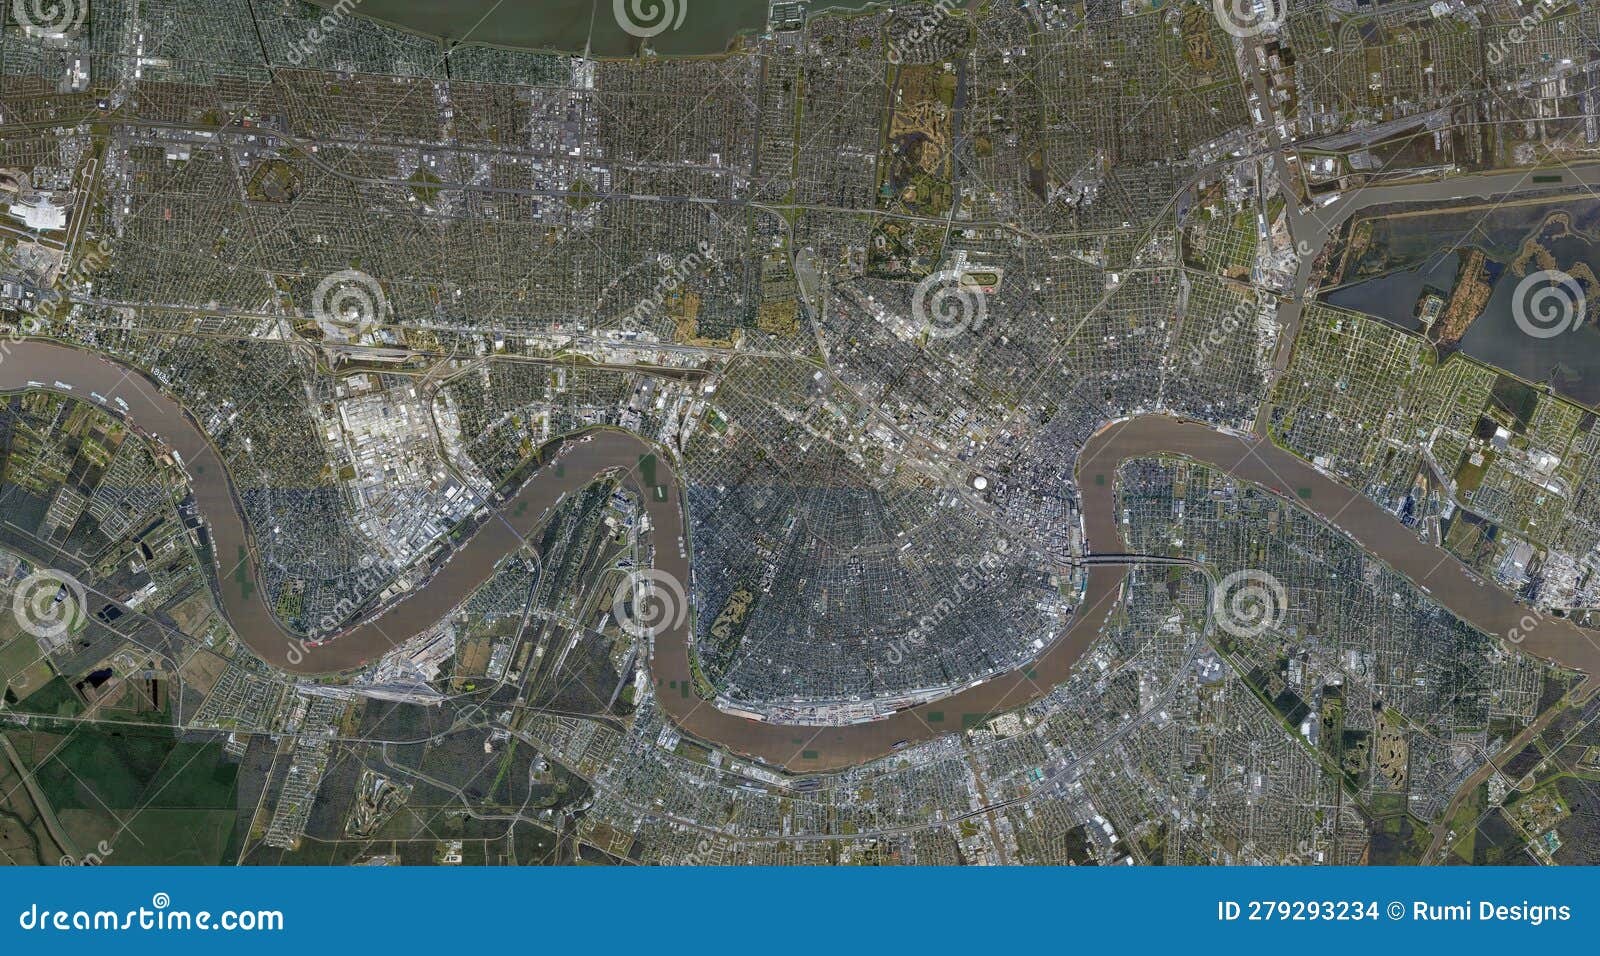 3d buildings rendering new orleans united states hd satellite image